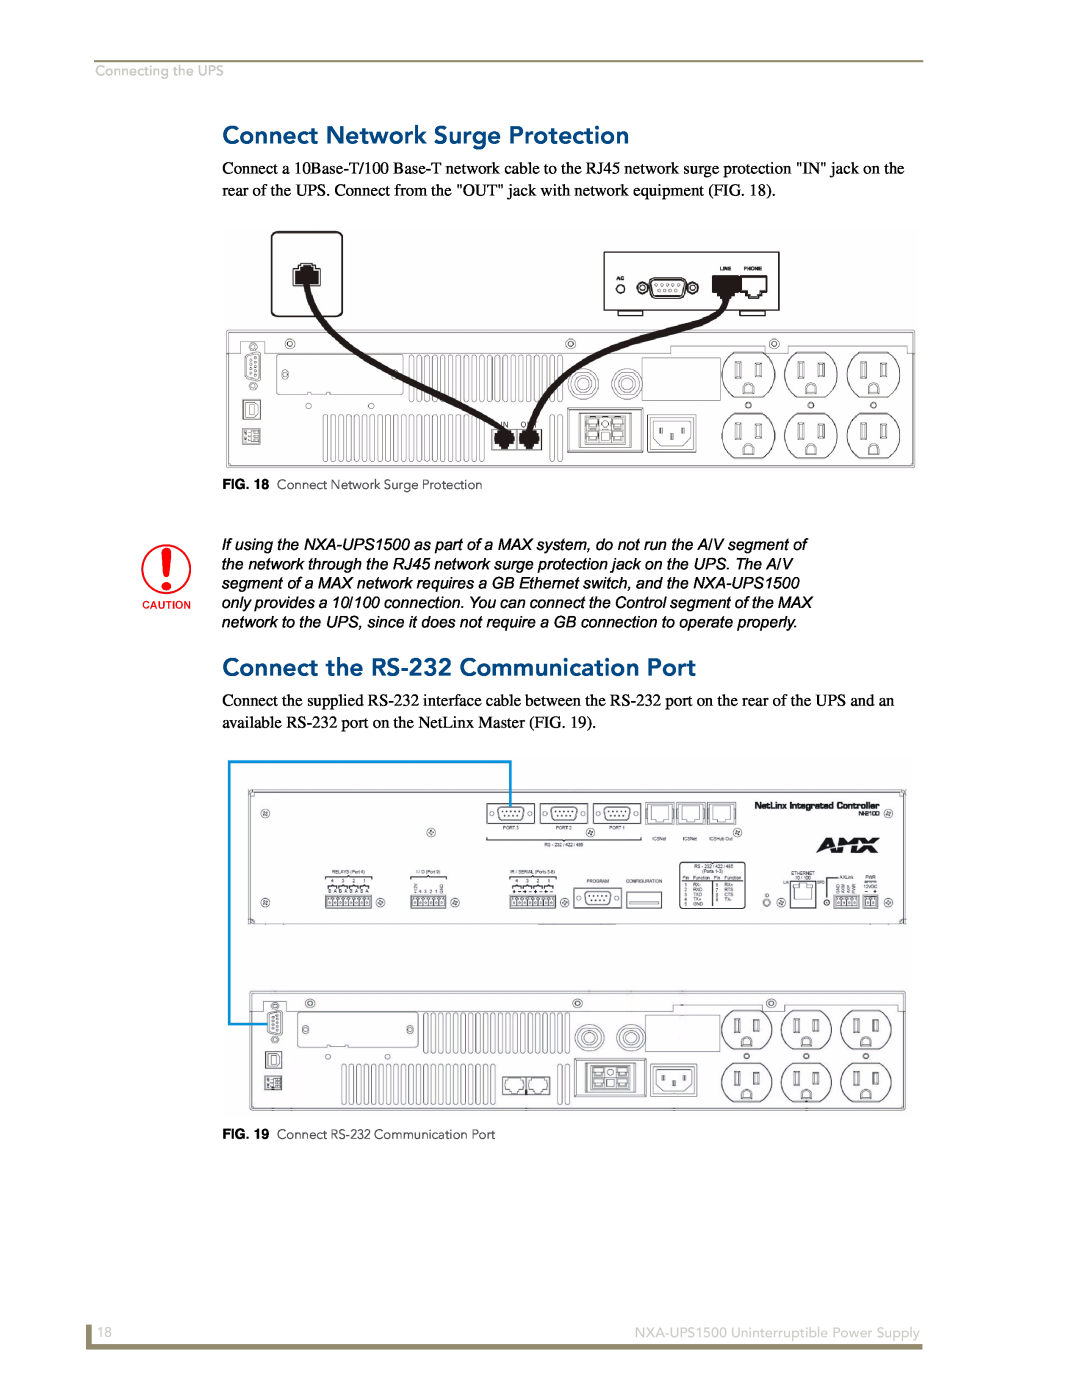 AMX NXA-UPS1500 Connect Network Surge Protection, Connect the RS-232 Communication Port, Connect RS-232 Communication Port 